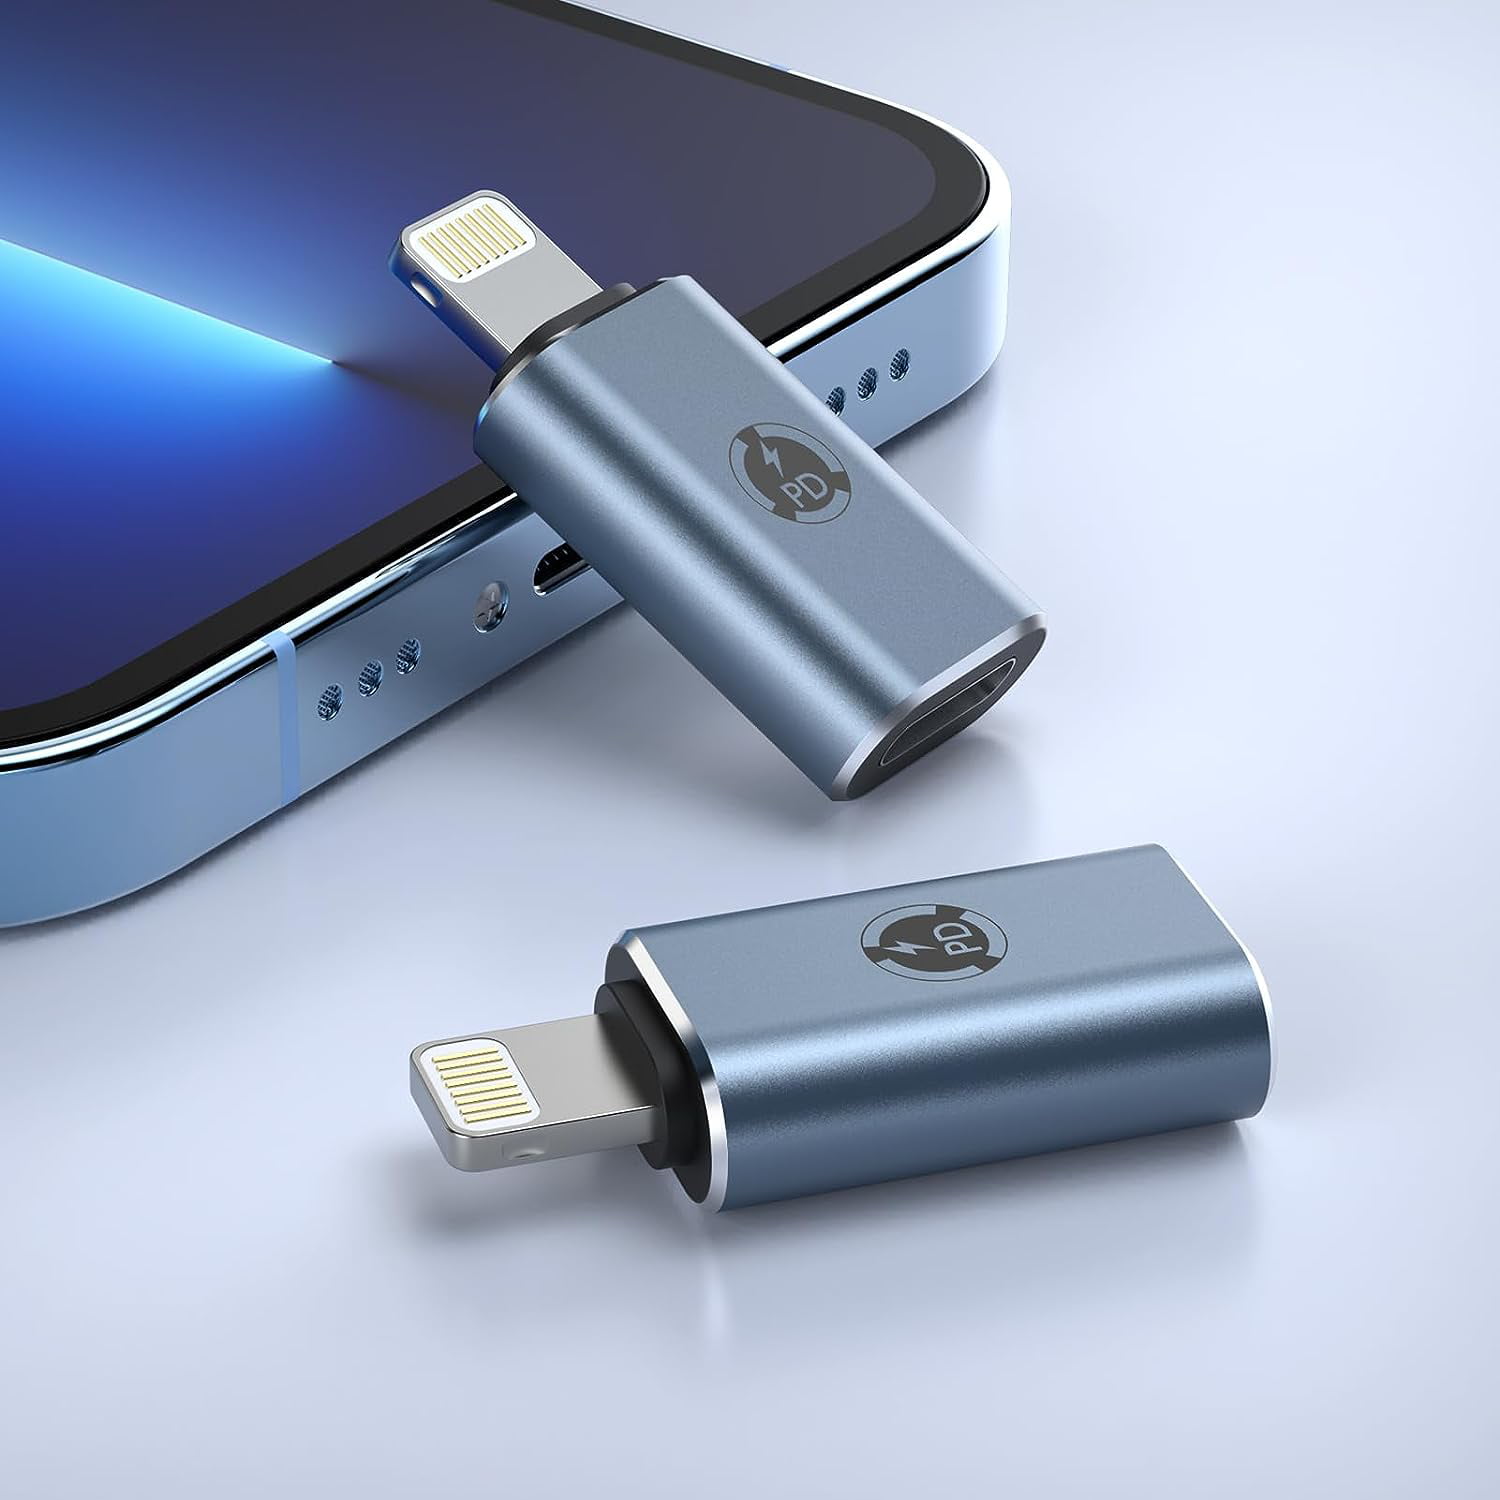 USB-C to Lightning Adapter